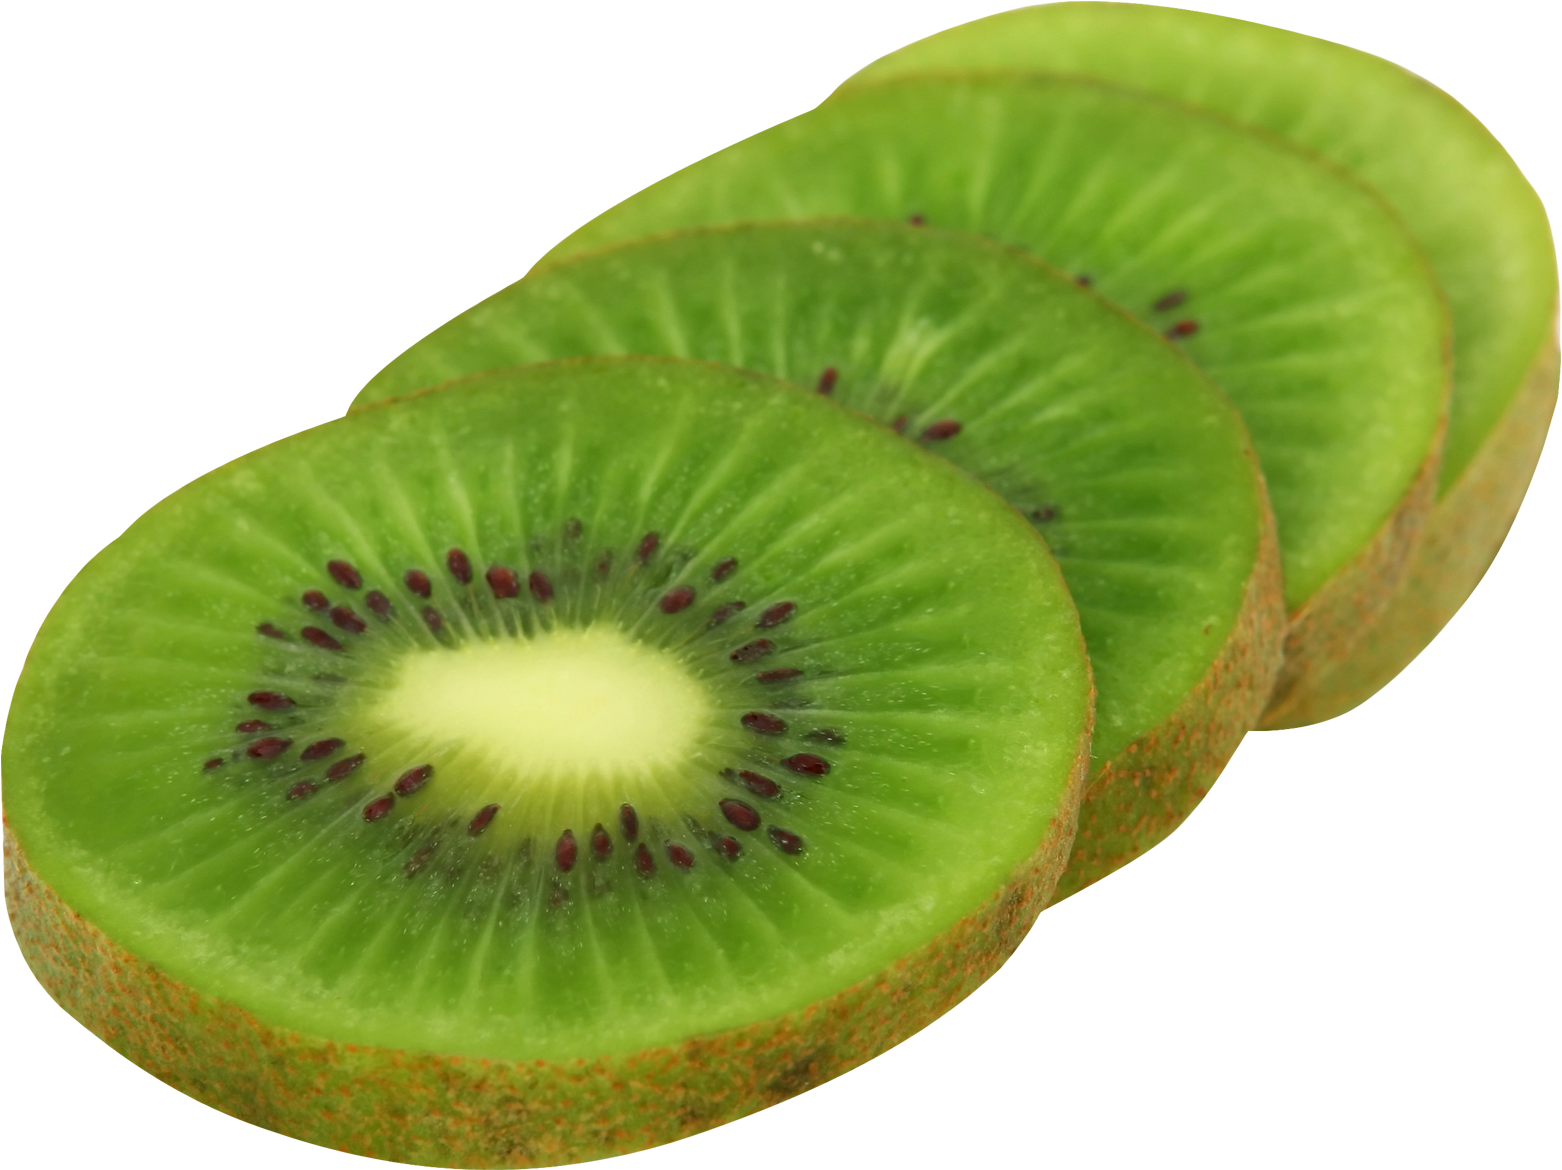 A Close Up Of A Kiwi